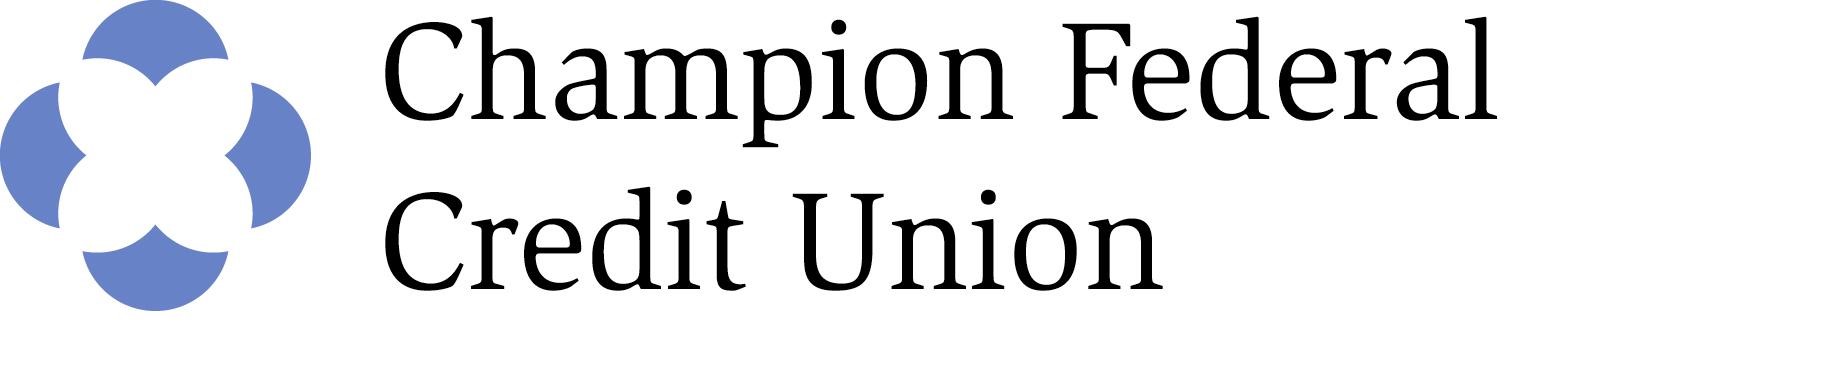 Champion Federal Credit Union Logo